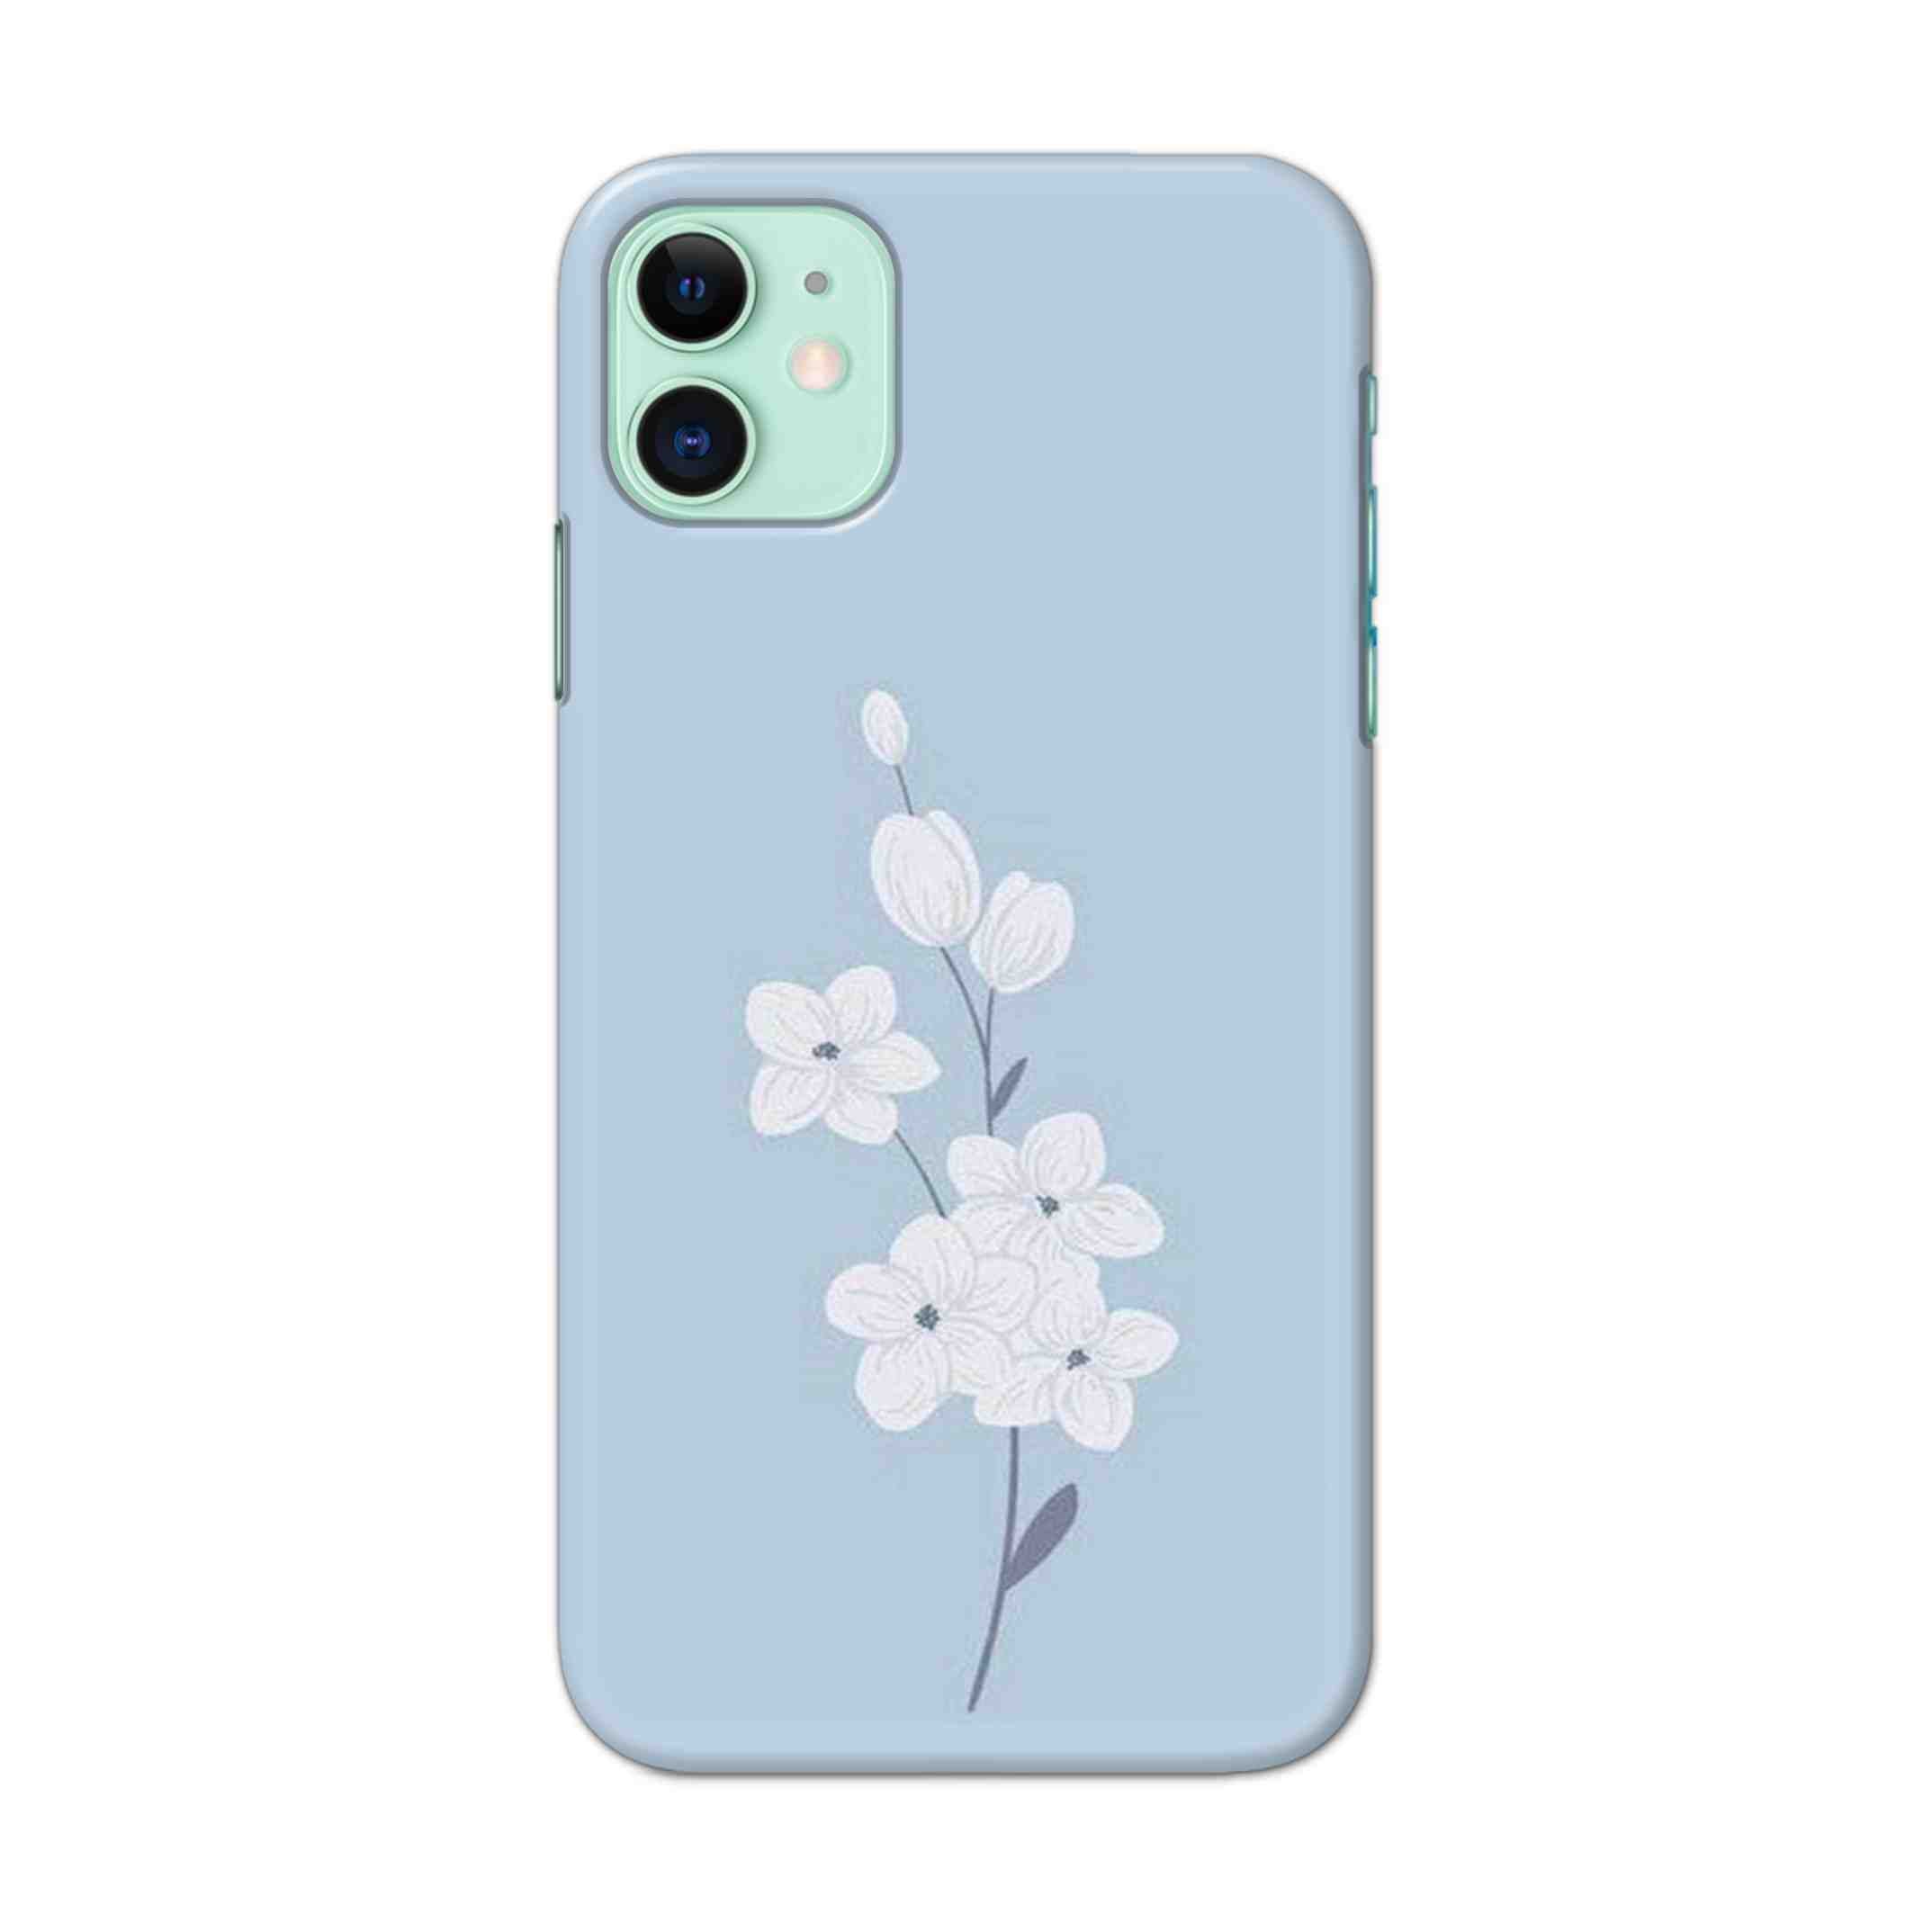 Buy White Flower Hard Back Mobile Phone Case Cover For iPhone 11 Online